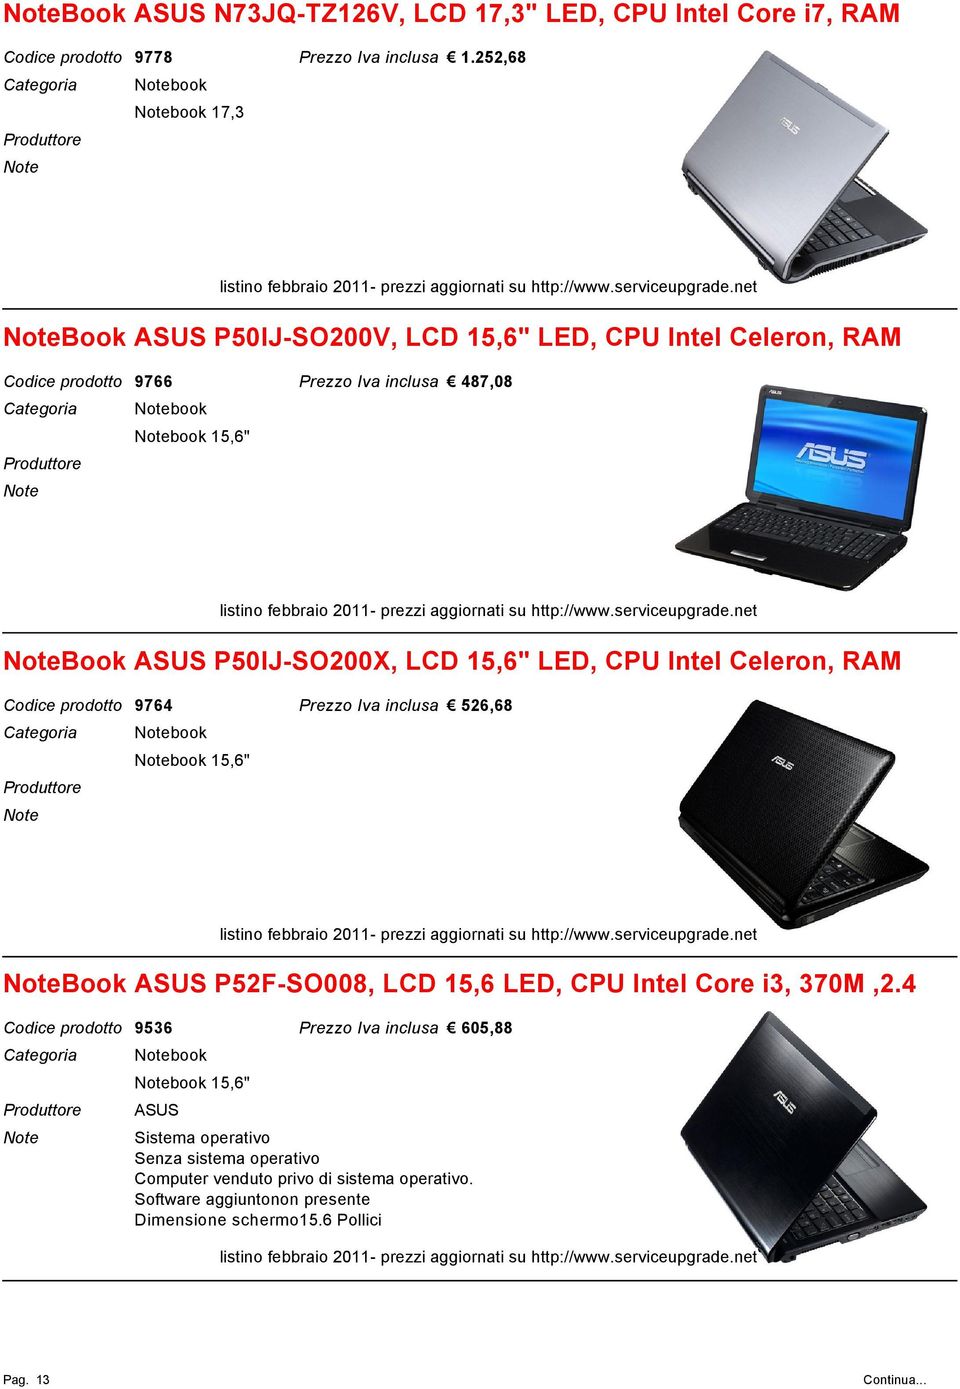 P50IJ-SO200X, LCD 15,6" LED, CPU Intel Celeron, RAM 9764 526,68 book book 15,6" Book P52F-SO008, LCD 15,6 LED, CPU Intel